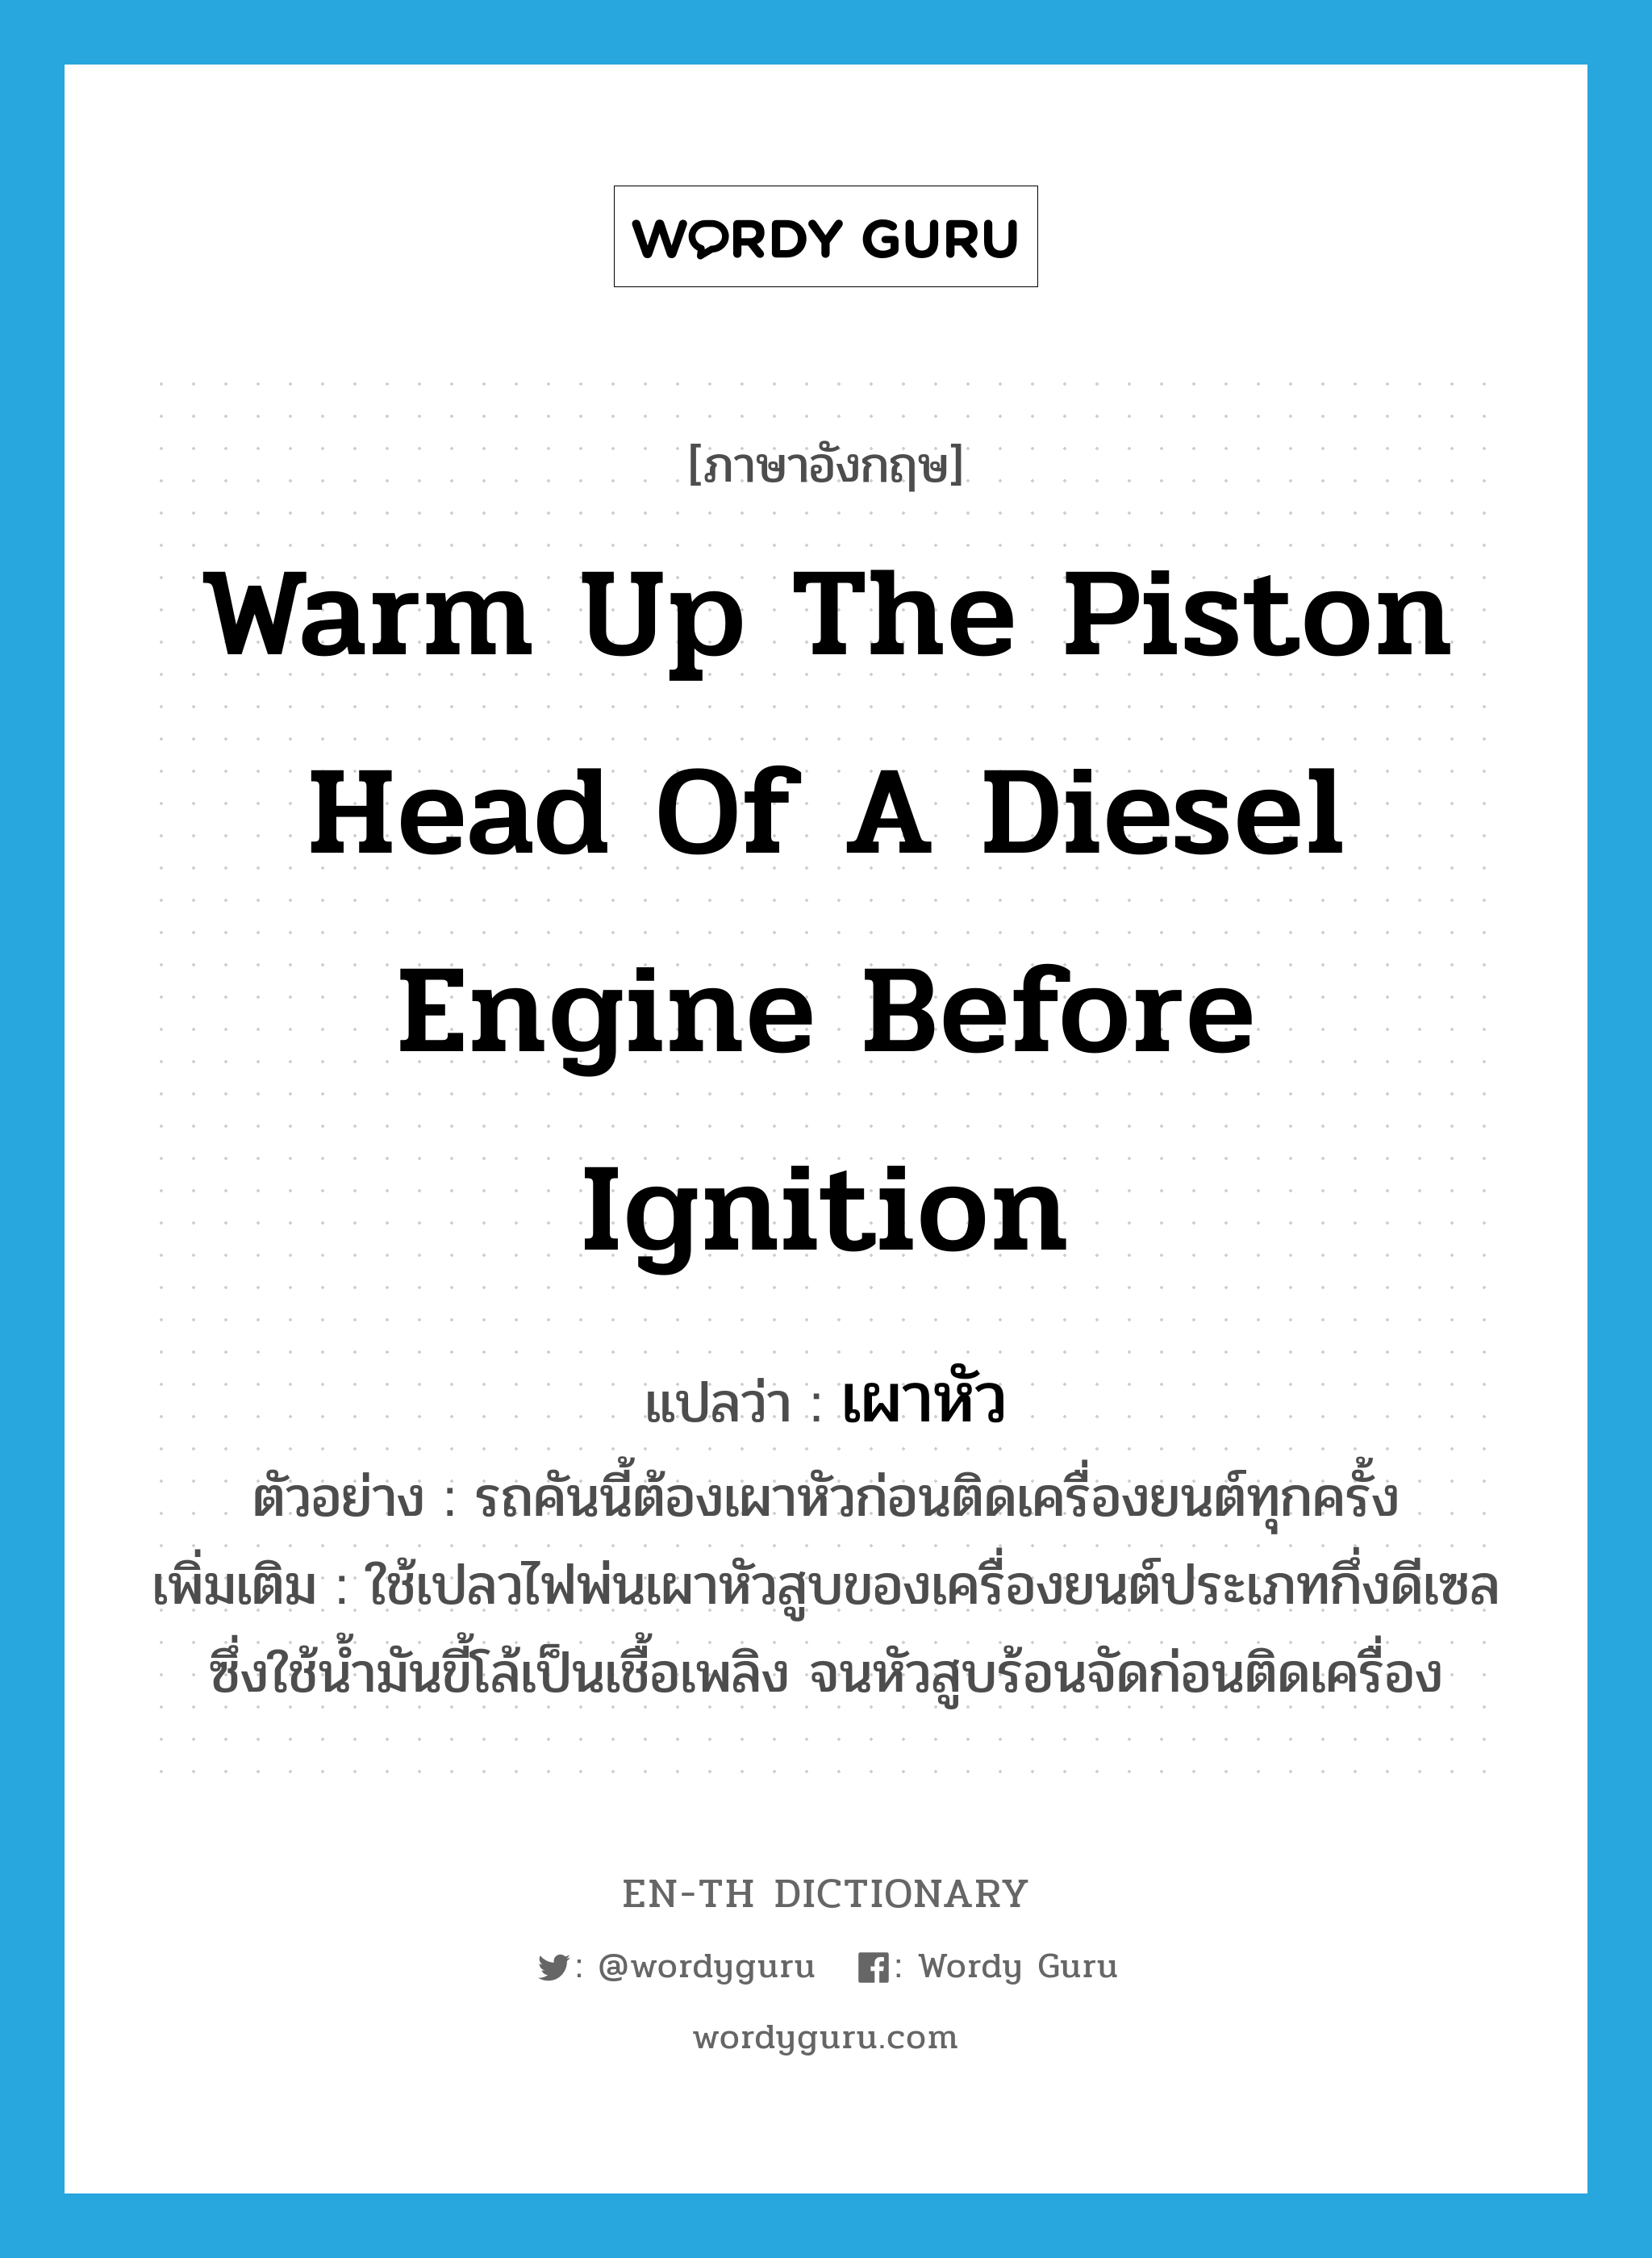 warm up the piston head of a diesel engine before ignition แปลว่า?, คำศัพท์ภาษาอังกฤษ warm up the piston head of a diesel engine before ignition แปลว่า เผาหัว ประเภท V ตัวอย่าง รถคันนี้ต้องเผาหัวก่อนติดเครื่องยนต์ทุกครั้ง เพิ่มเติม ใช้เปลวไฟพ่นเผาหัวสูบของเครื่องยนต์ประเภทกึ่งดีเซลซึ่งใช้น้ำมันขี้โล้เป็นเชื้อเพลิง จนหัวสูบร้อนจัดก่อนติดเครื่อง หมวด V